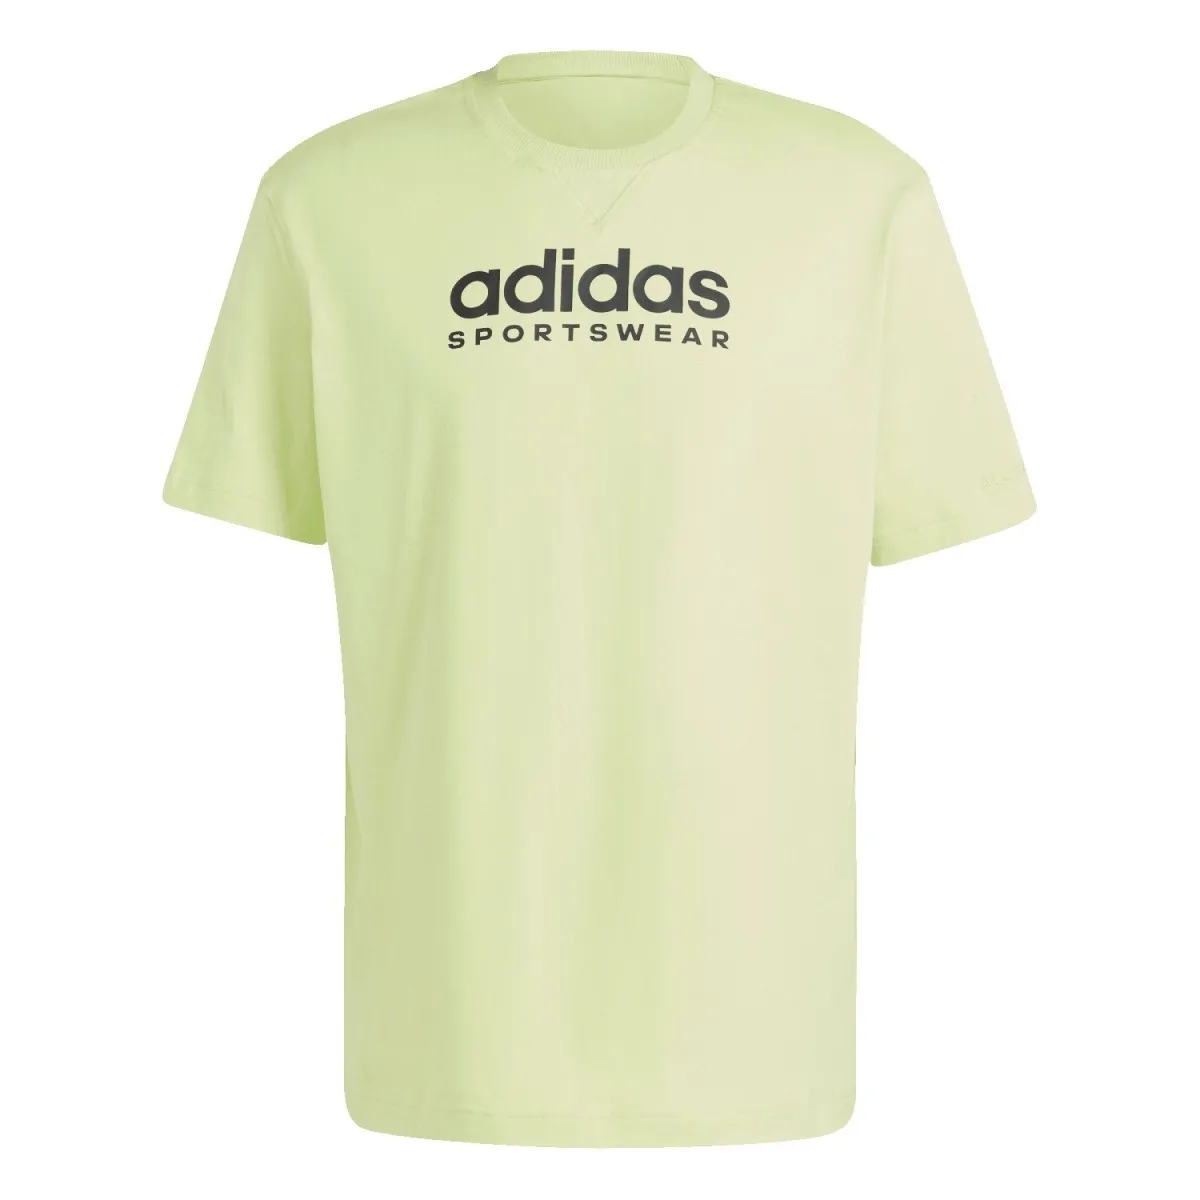 adidas sportswear T-shirt yellow turquoise